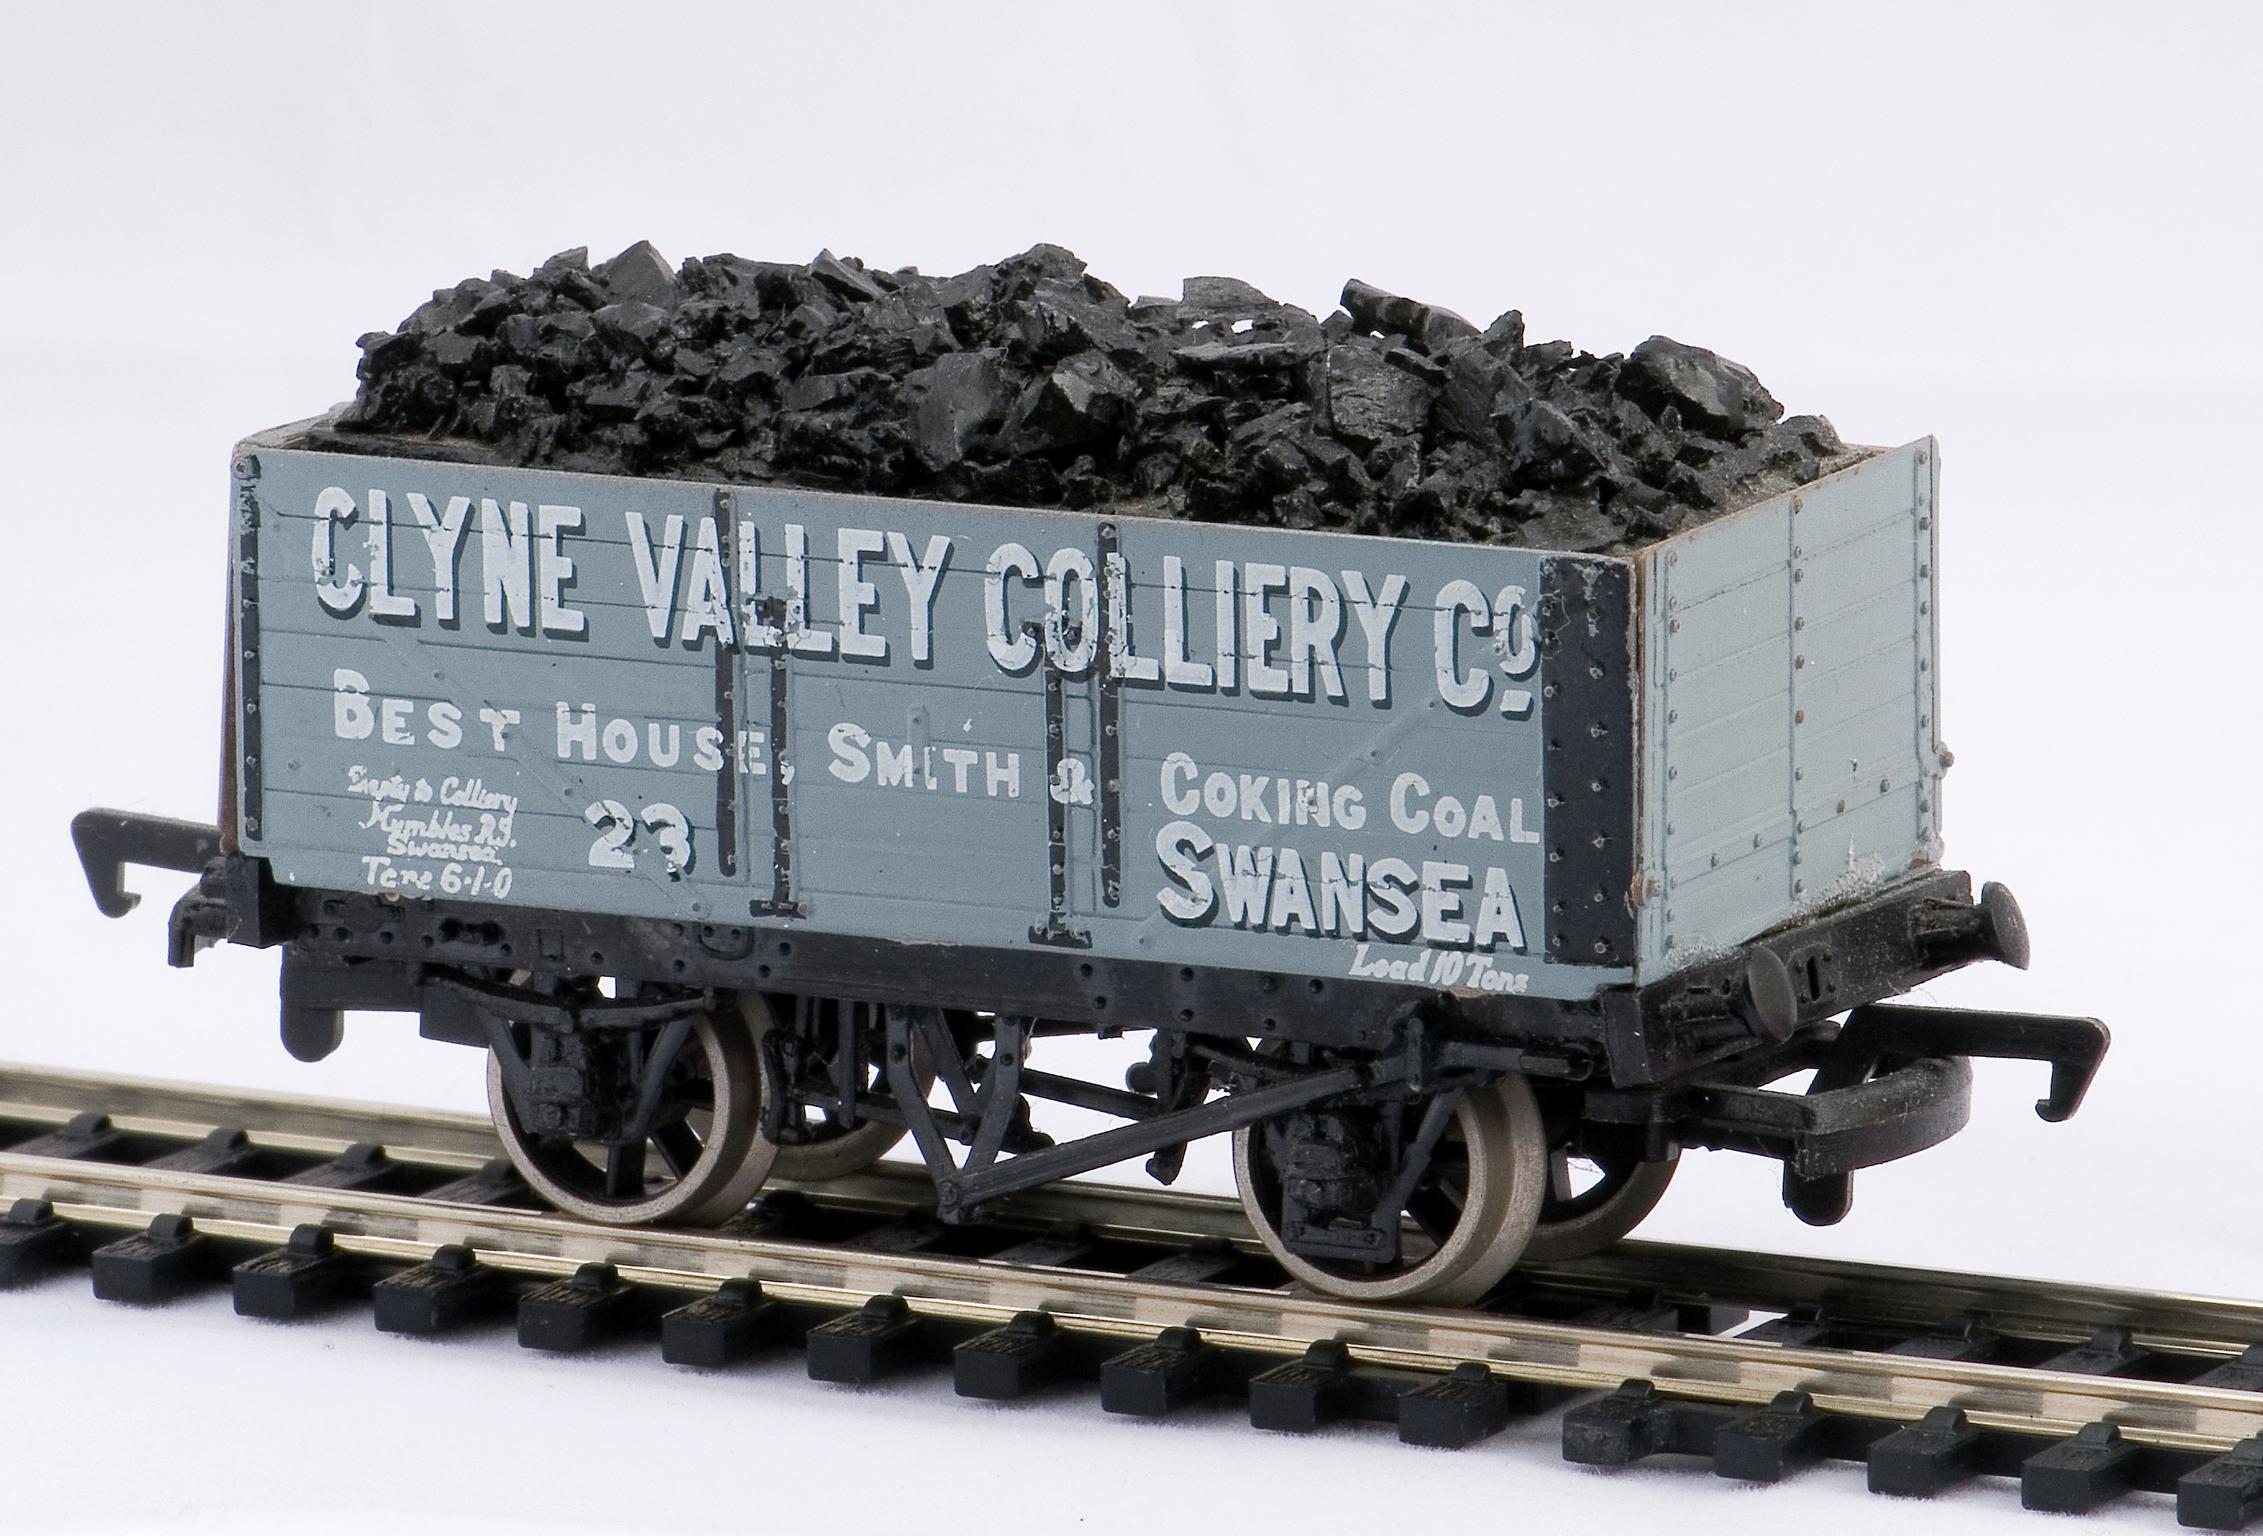 Clyne Valley Colliery Co., coal wagon model